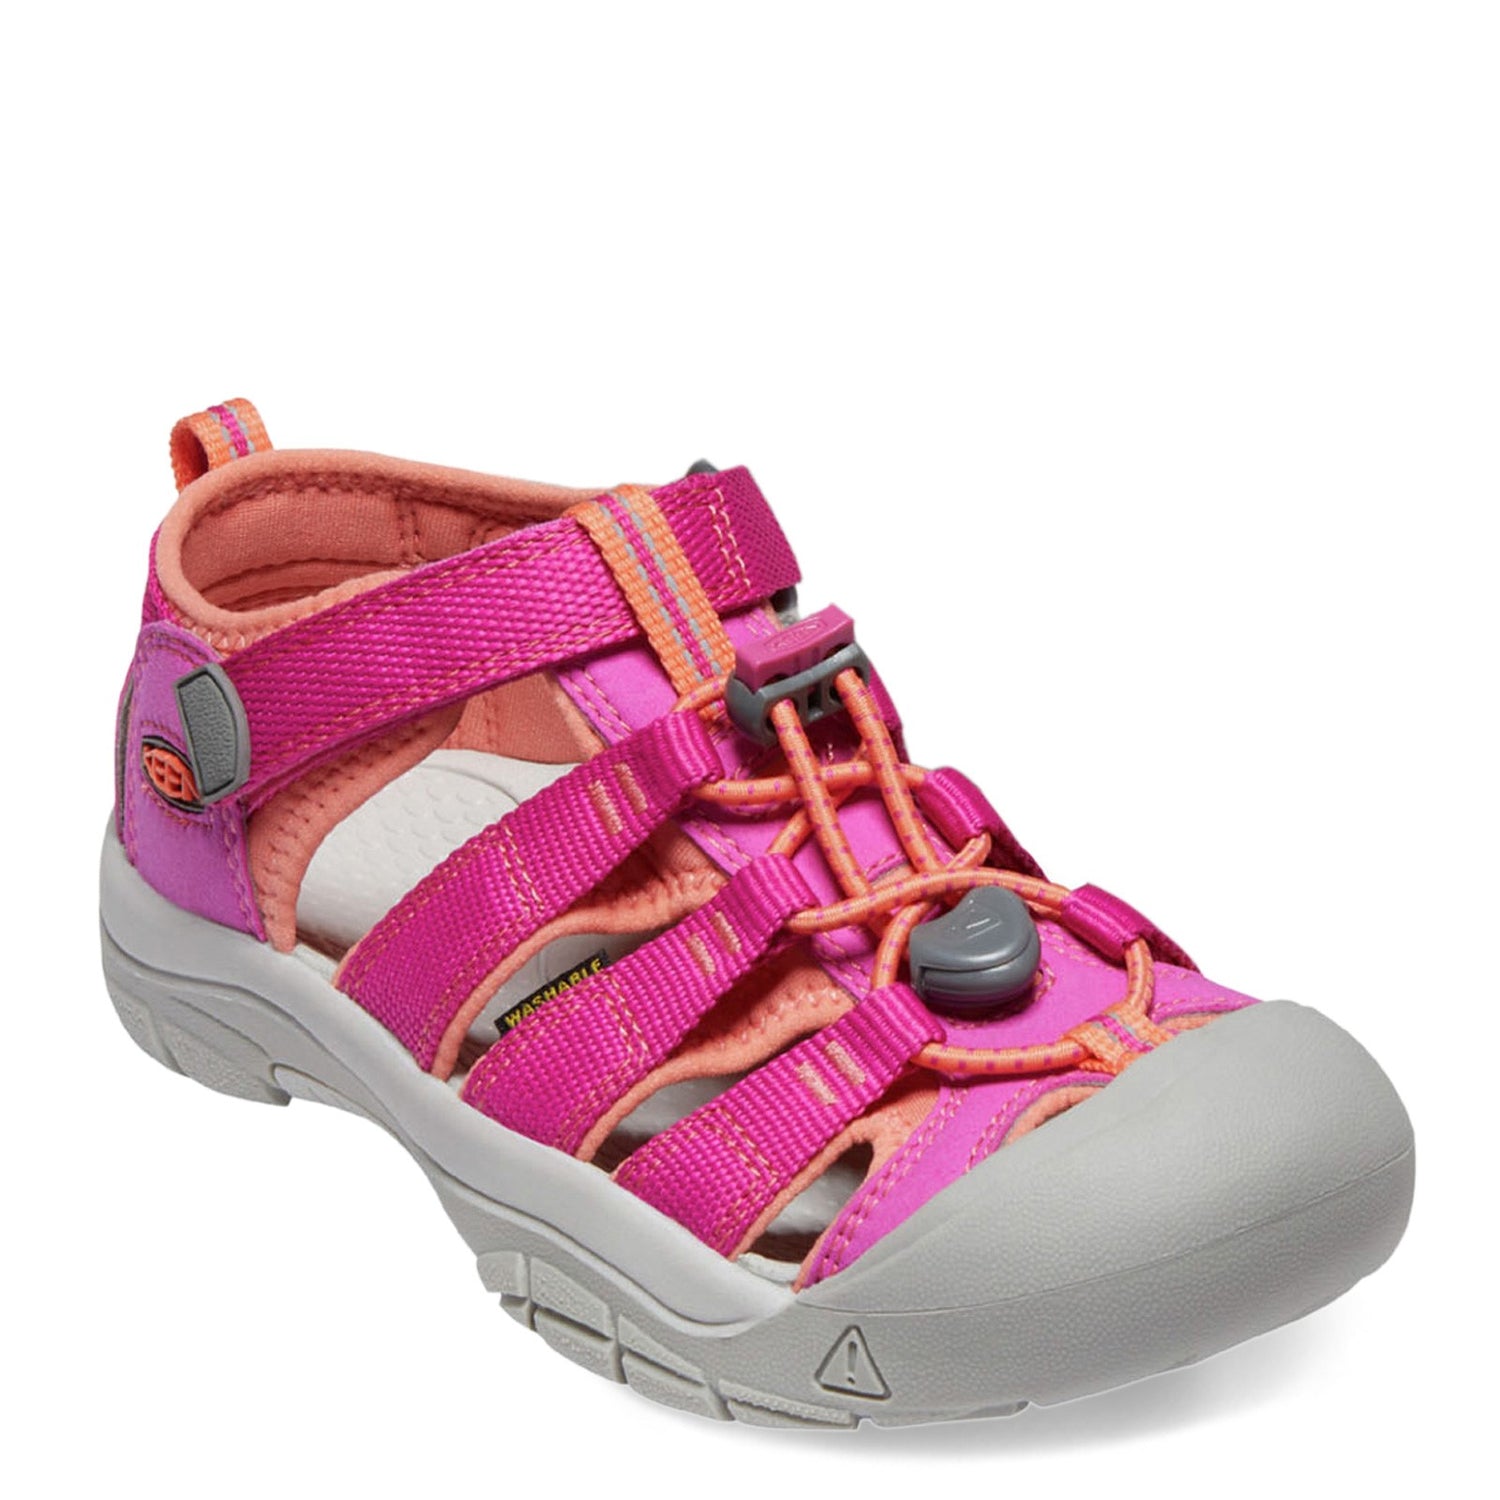 Peltz Shoes  Girl's Keen Newport H2 Sandal - Little Kid & Big Kid Very Berry/Fushion Coral 1014267